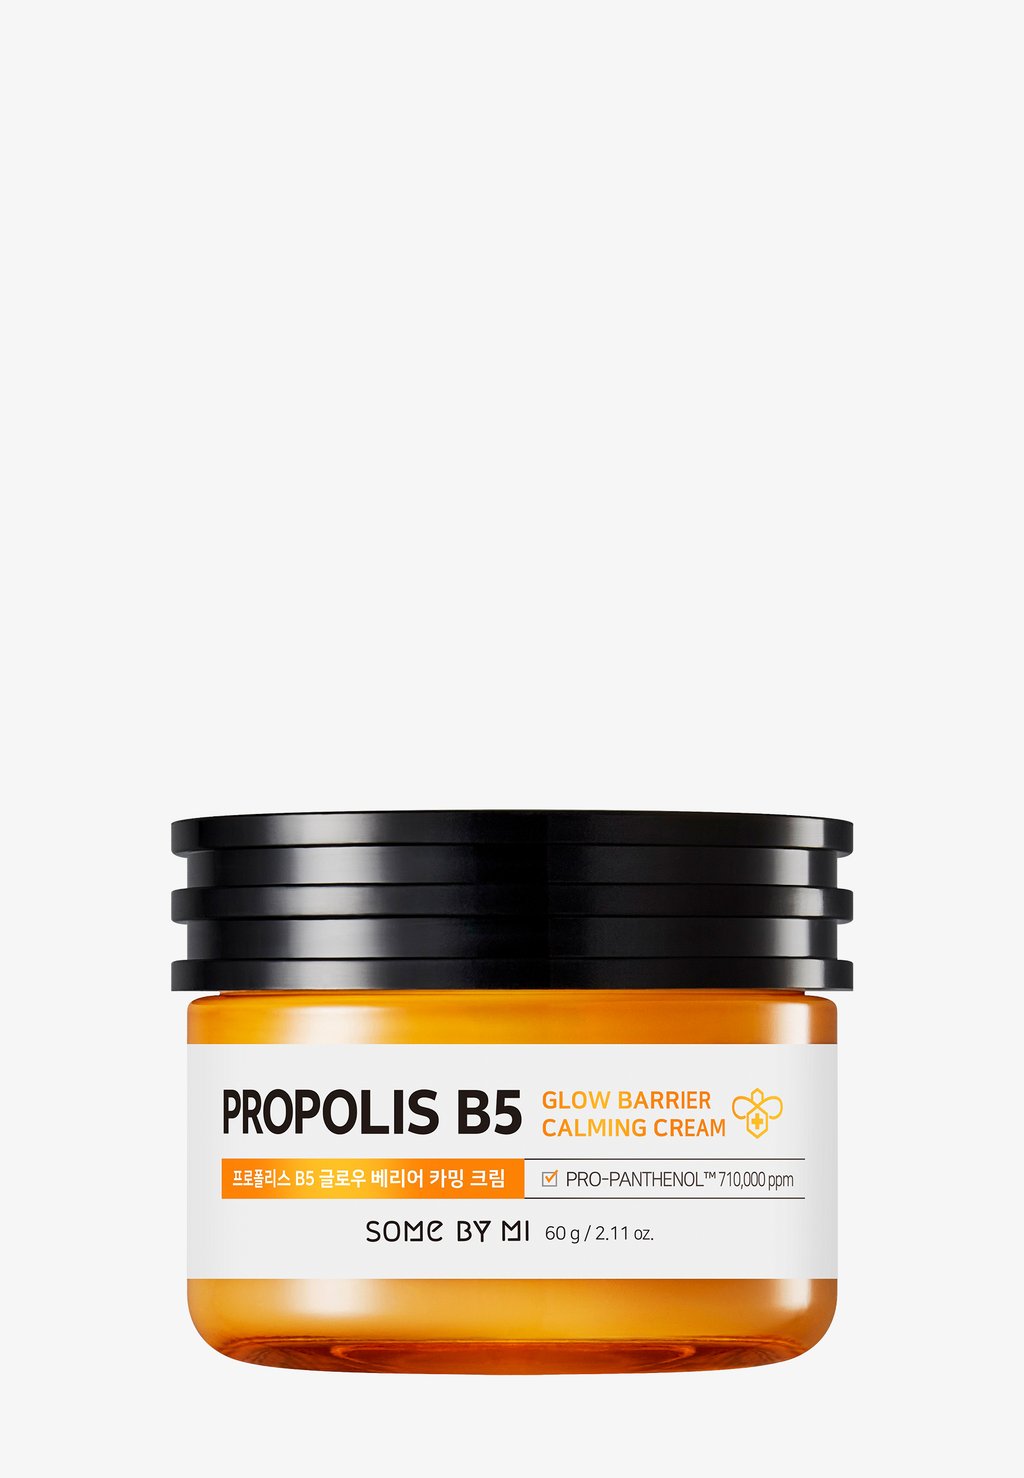 Дневной крем Propolis B5 Glow Barrier Calming Cream SOME BY MI some by mi propolis b5 glow barrier calming cream